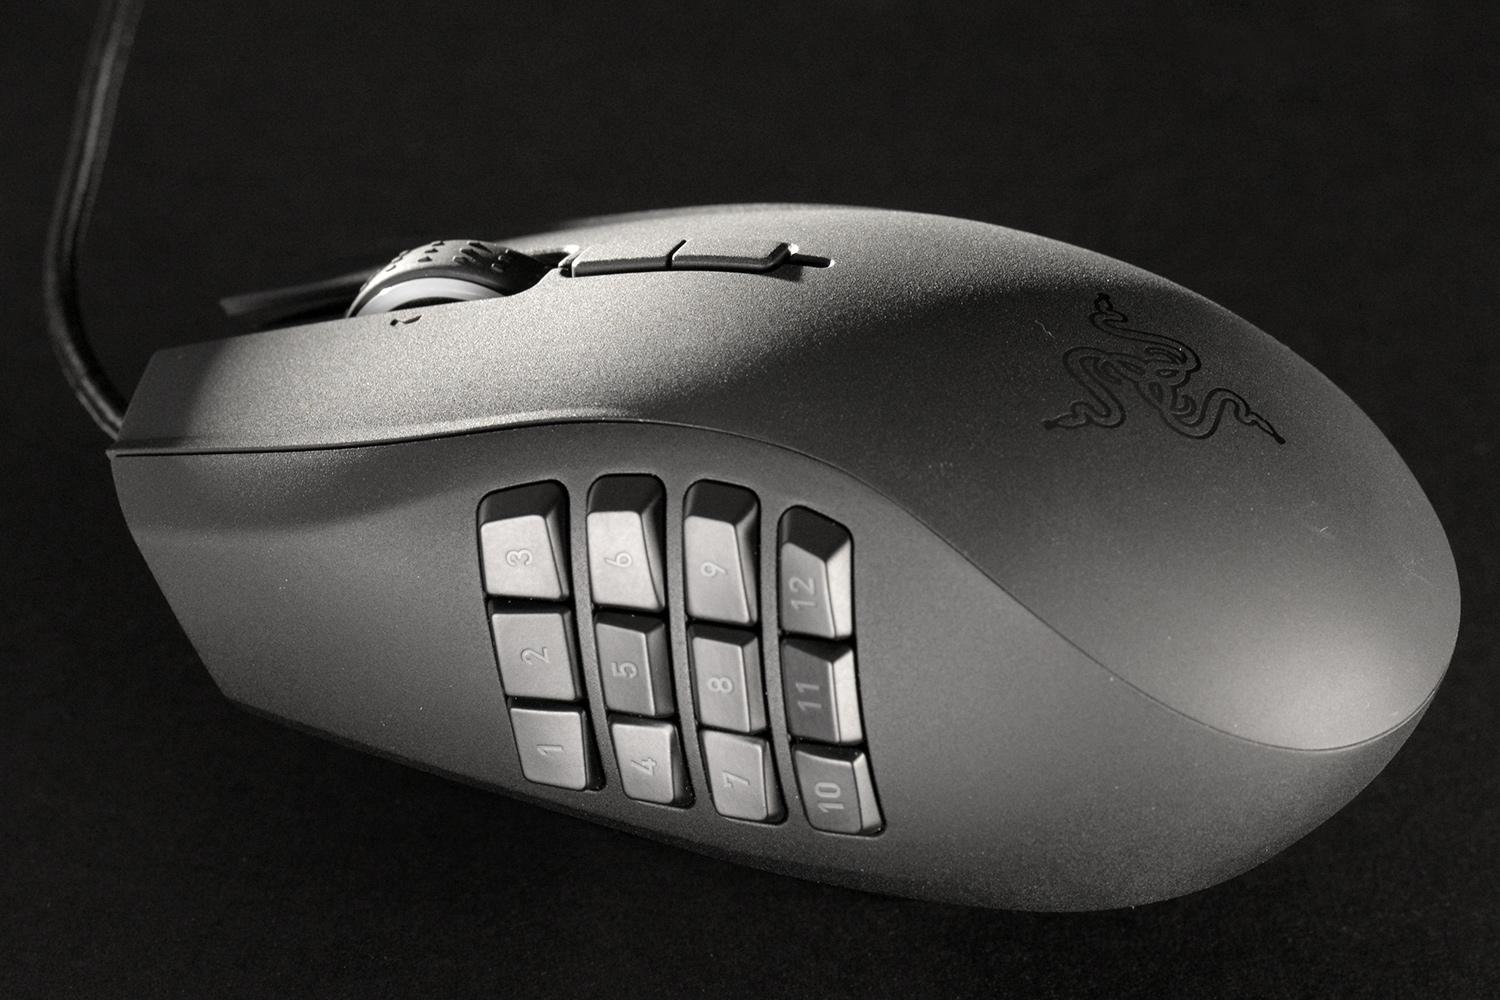 Razer Naga X Gaming Mouse Review